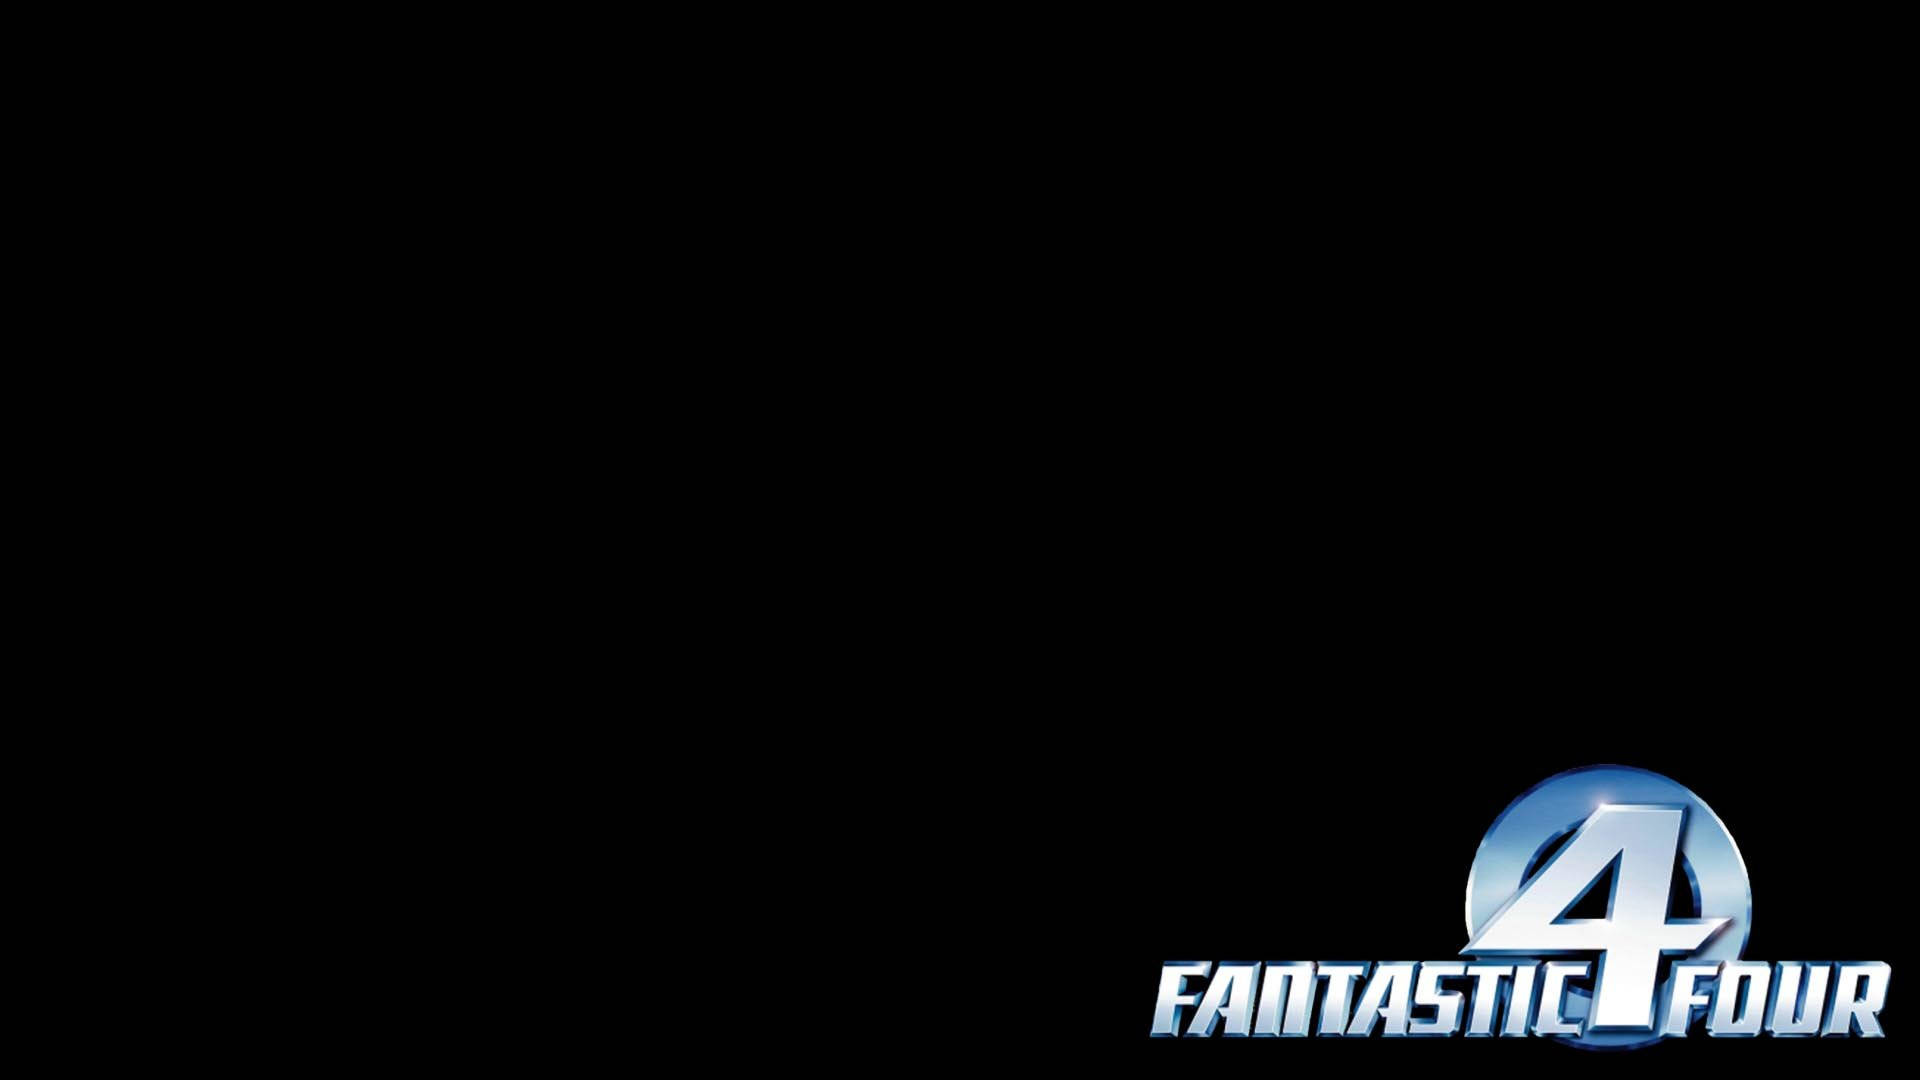 Fantastic Four Minimalist Logo Background